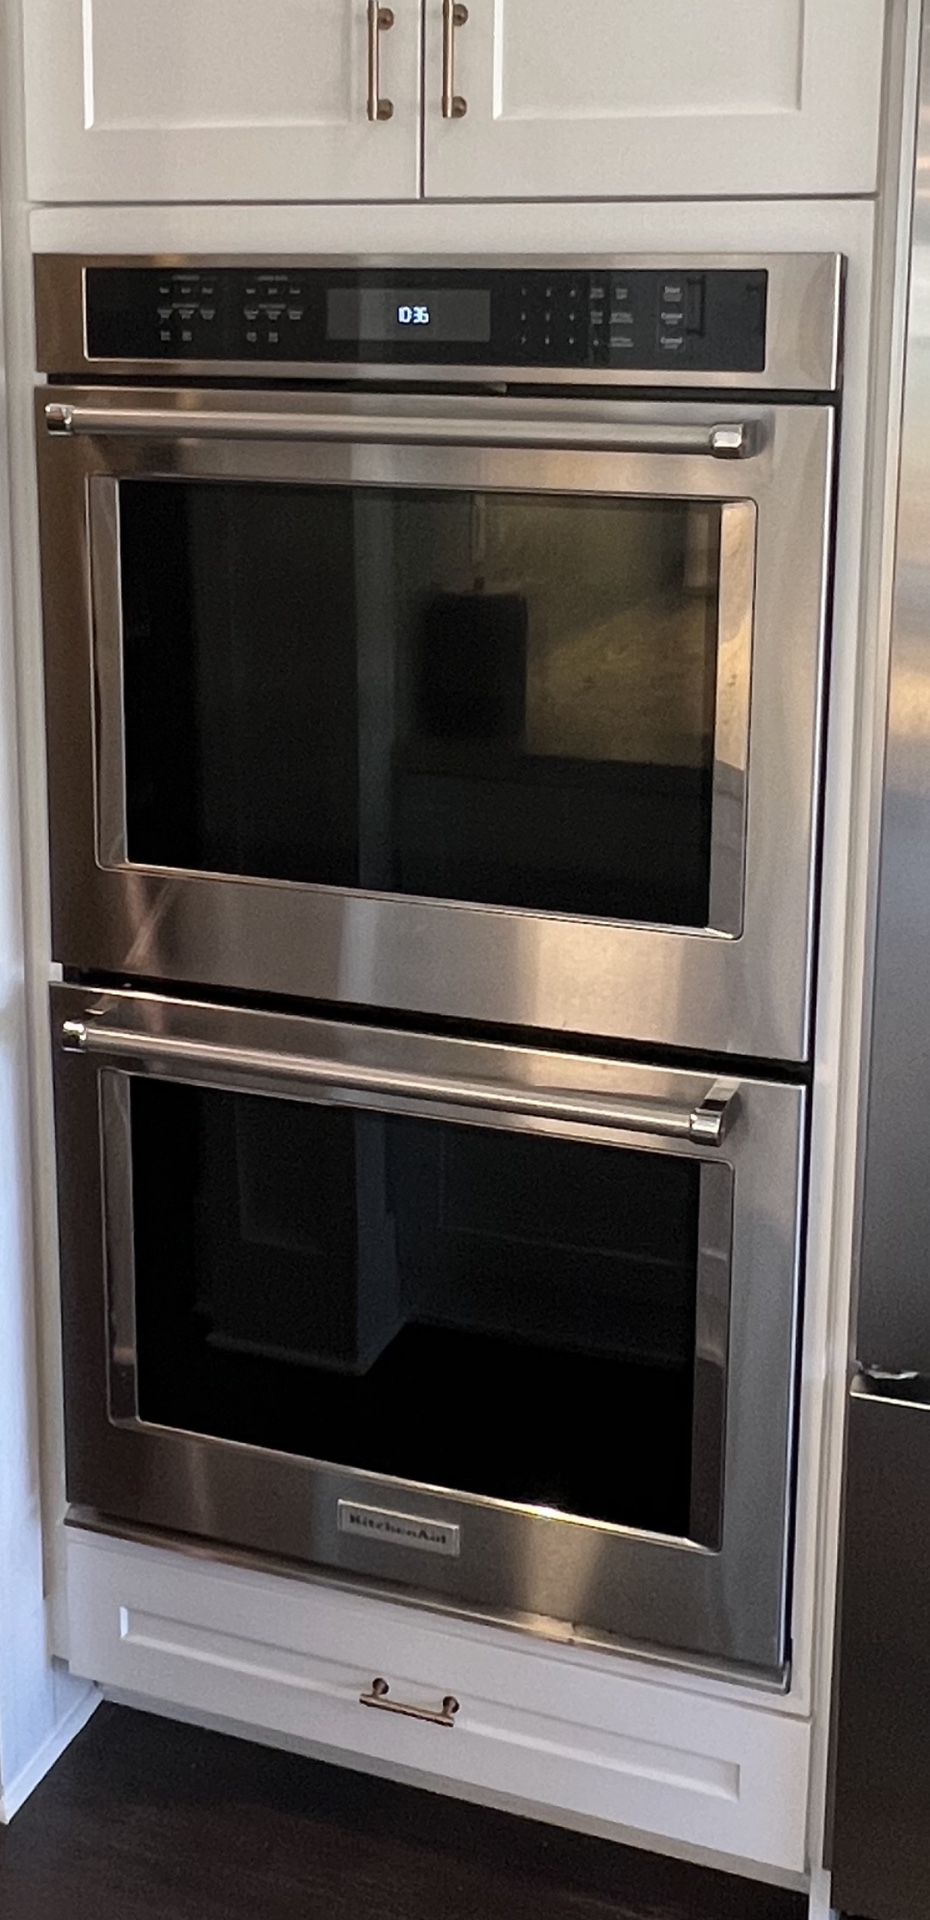 KitchenAid KODE500ESS Double Oven